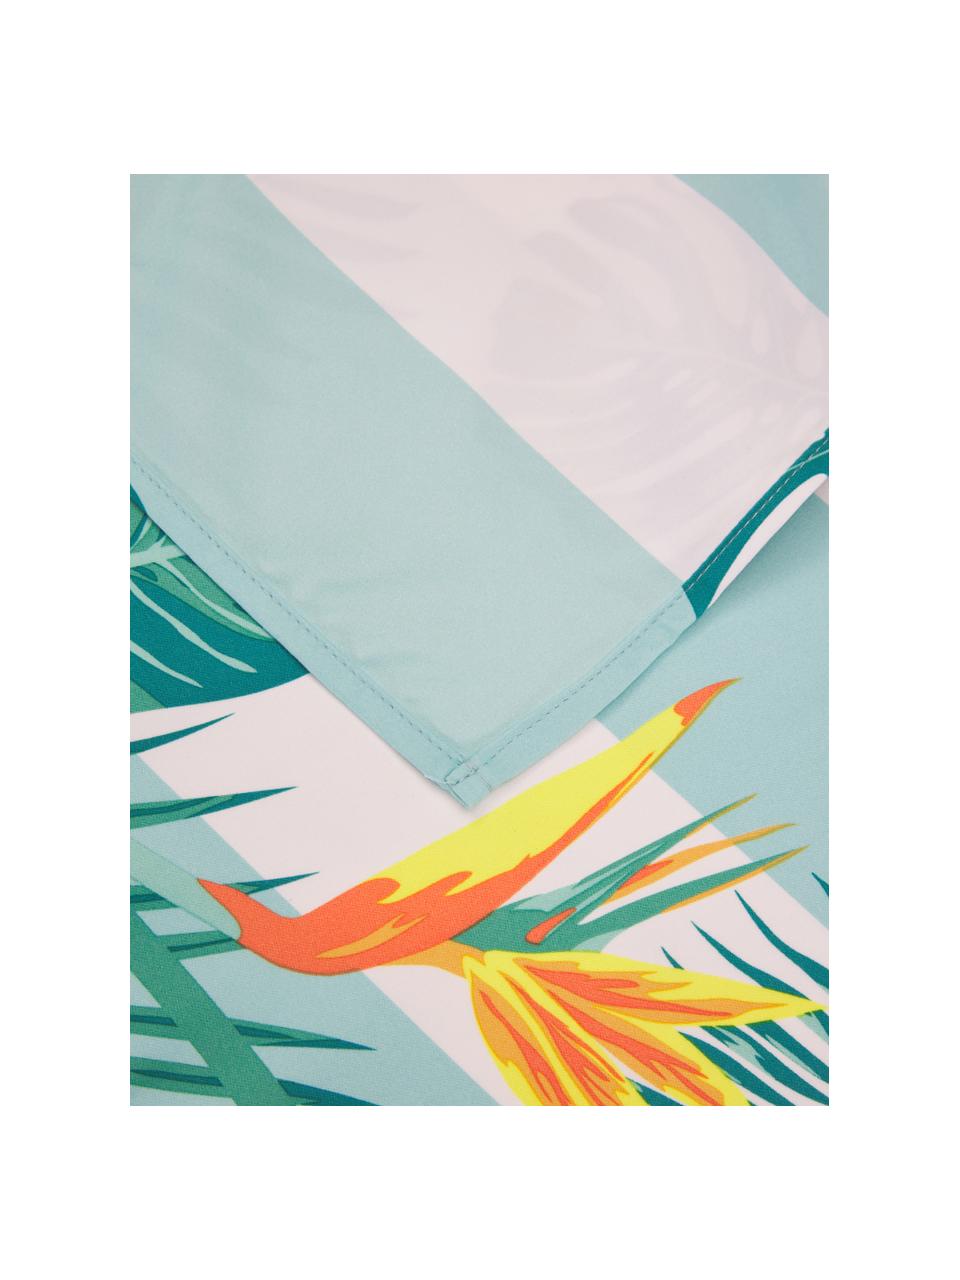 Fouta motif tropical Botanical, Blanc, jaune, turquoise, larg. 90 x long. 200 cm